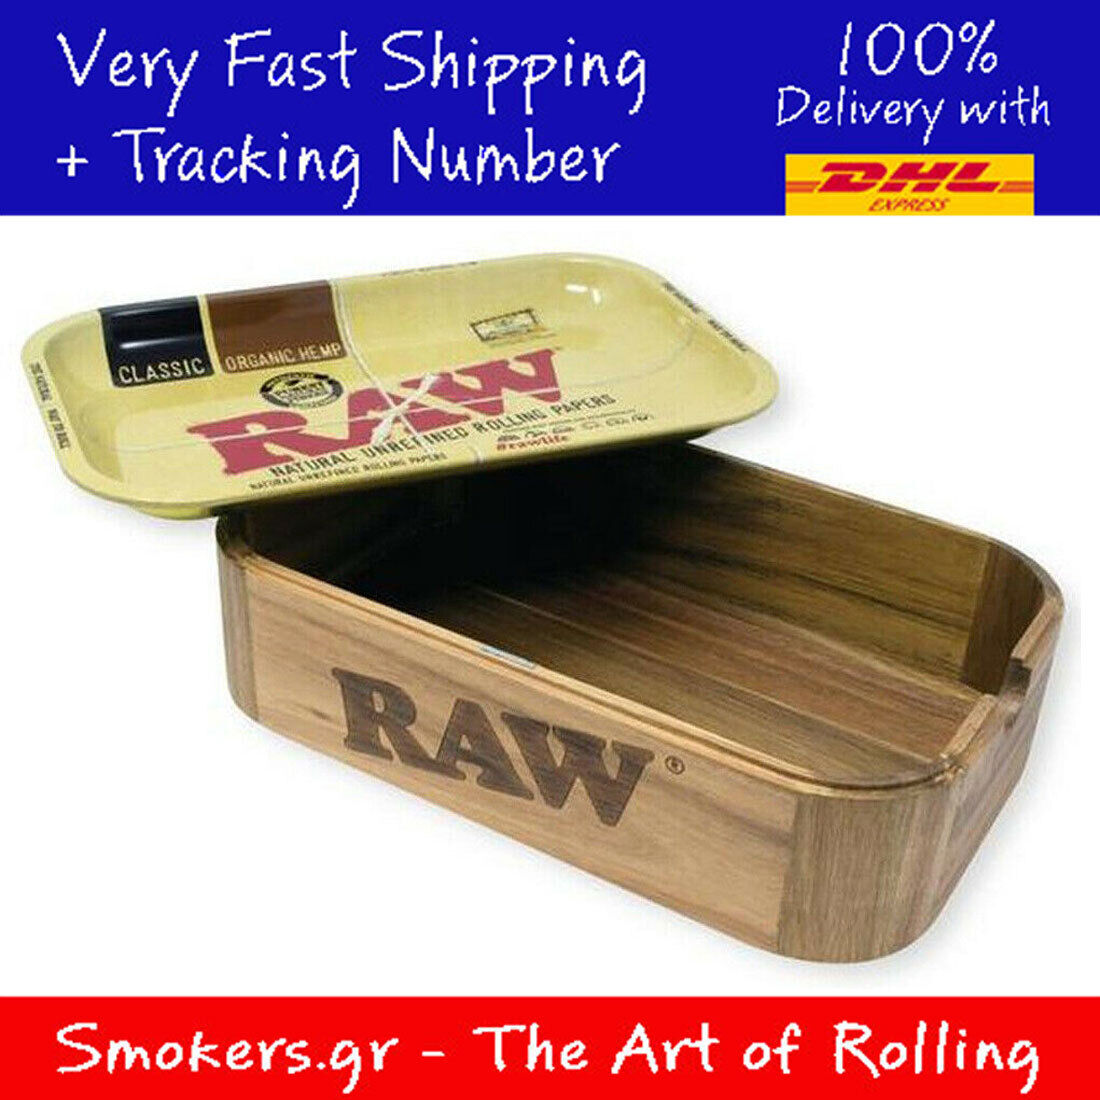 1x RAW Cache Box + GIFT 10x RAW KS Papers